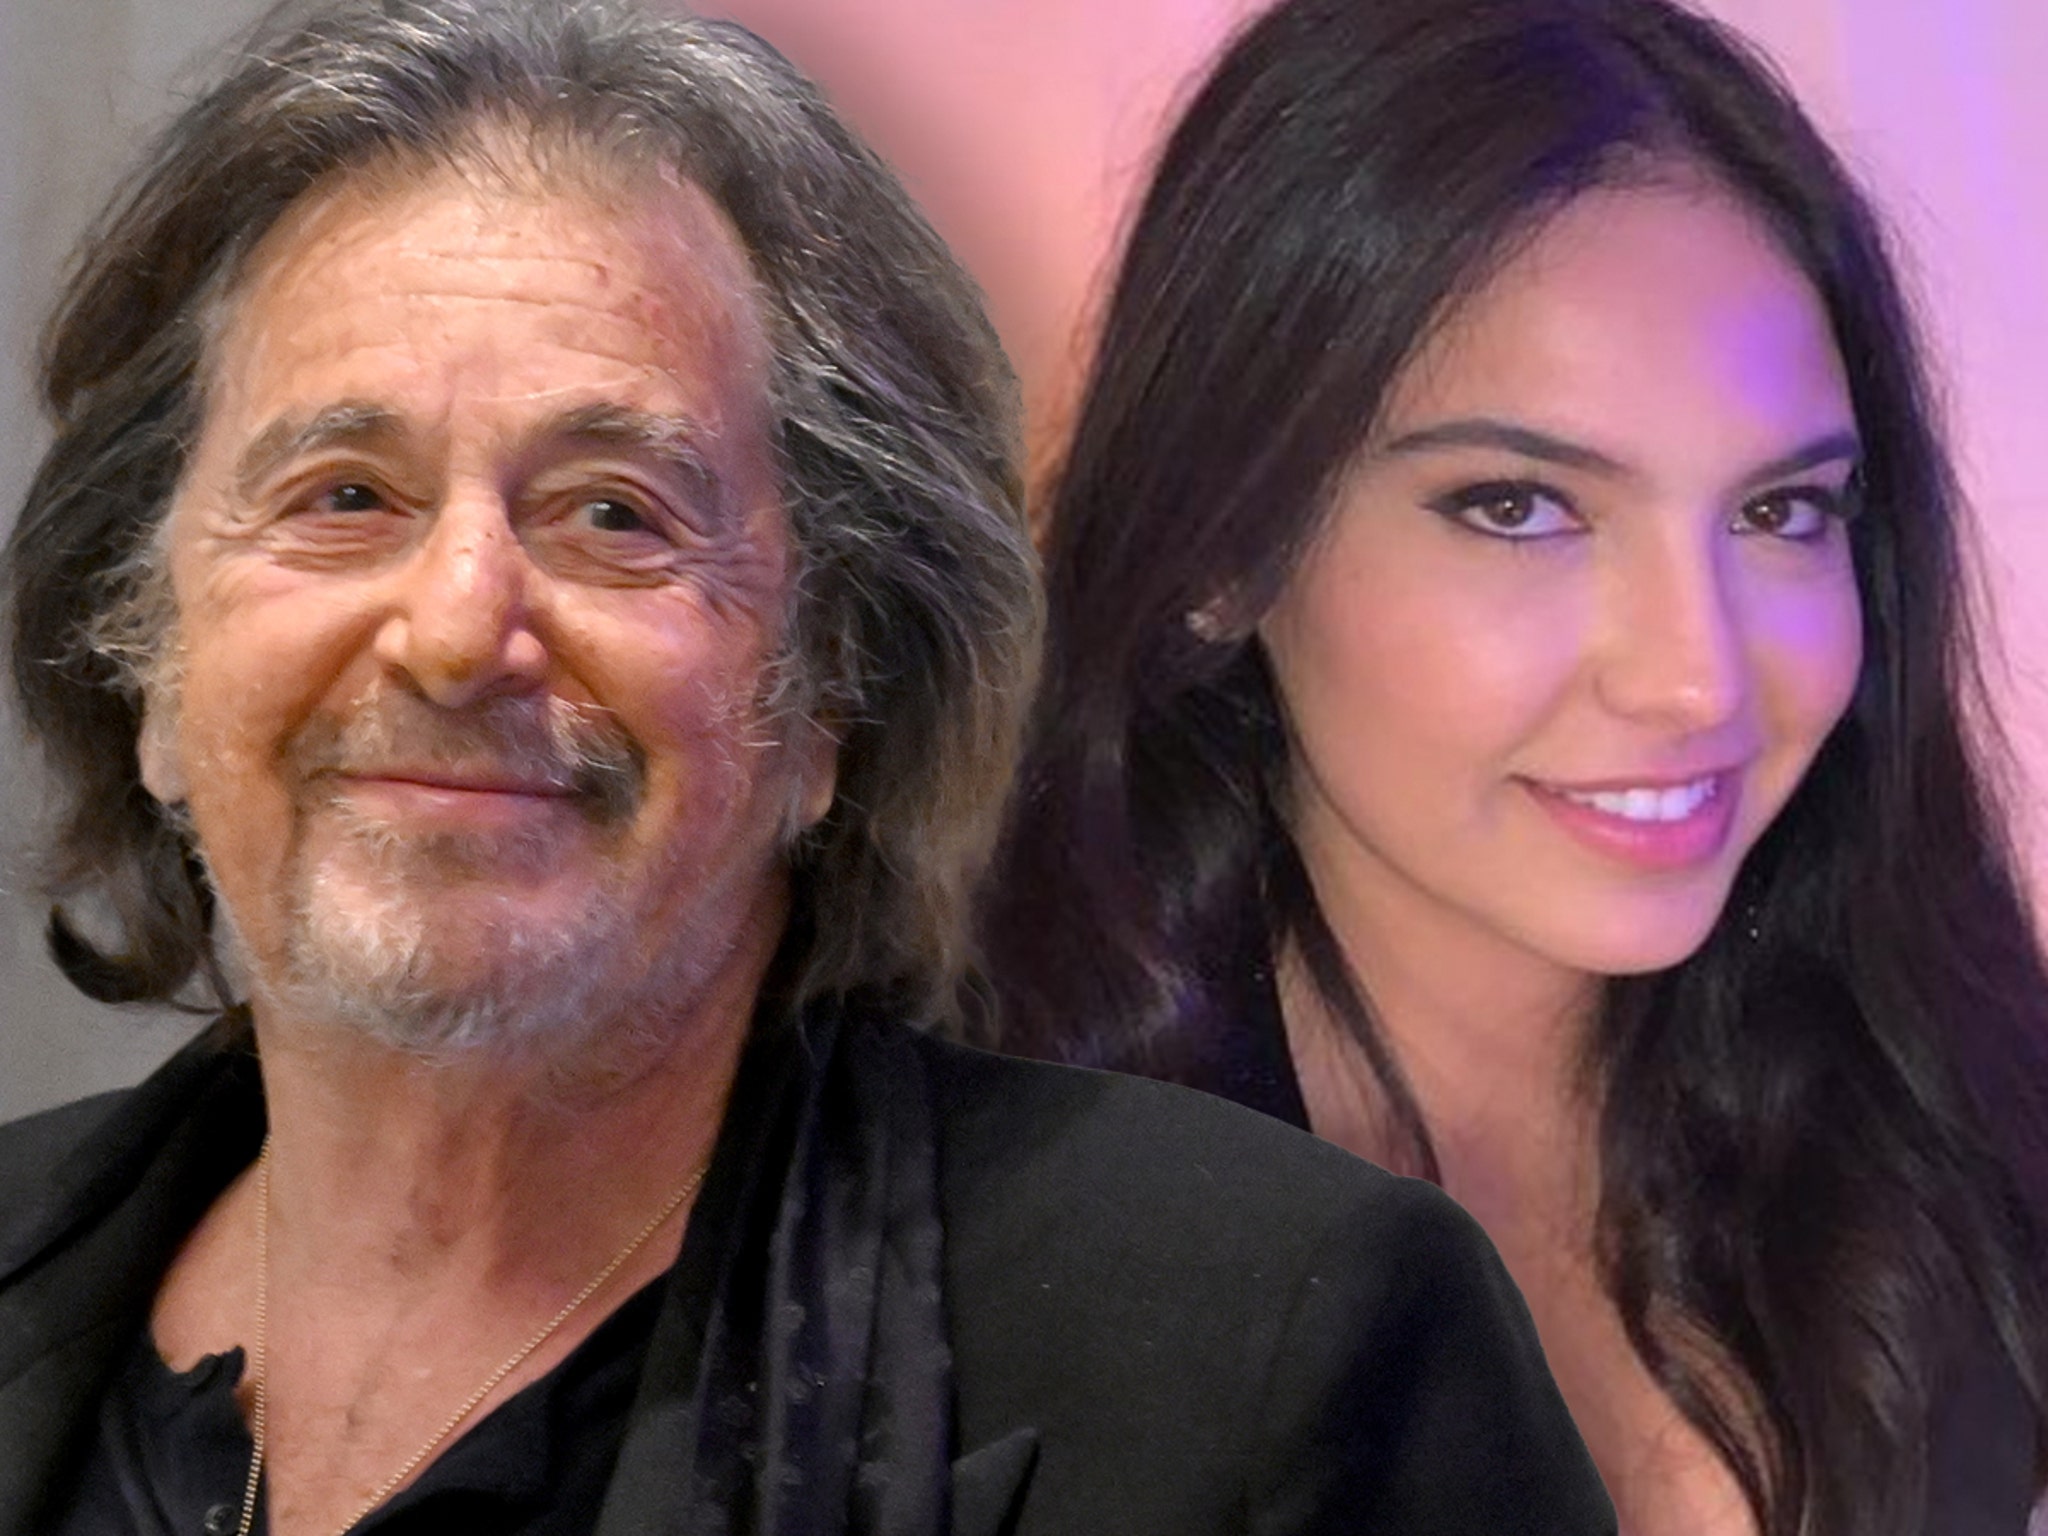 Al Pacino, 83, Surprised By 29-Year-Old Girlfriends Pregnancy